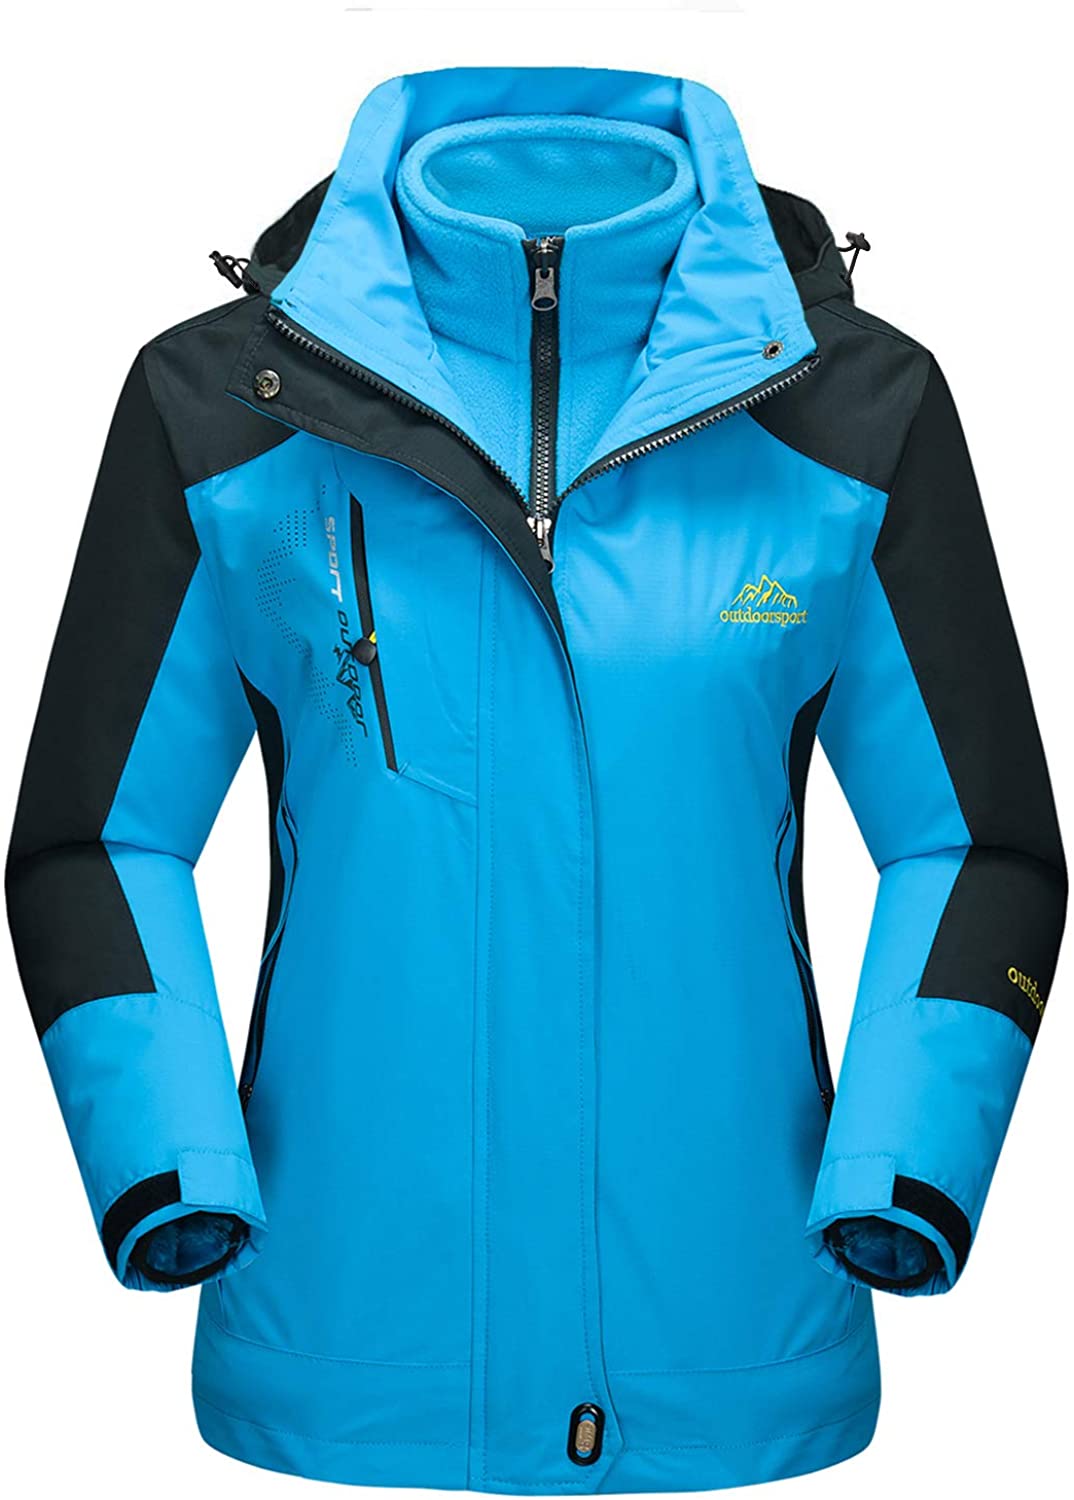 MAGCOMSEN Women's 3-in-1 Winter Ski Jacket with Detachable Hood Water Resistant Fleece Lining Snowboard Ski Rain Jacket